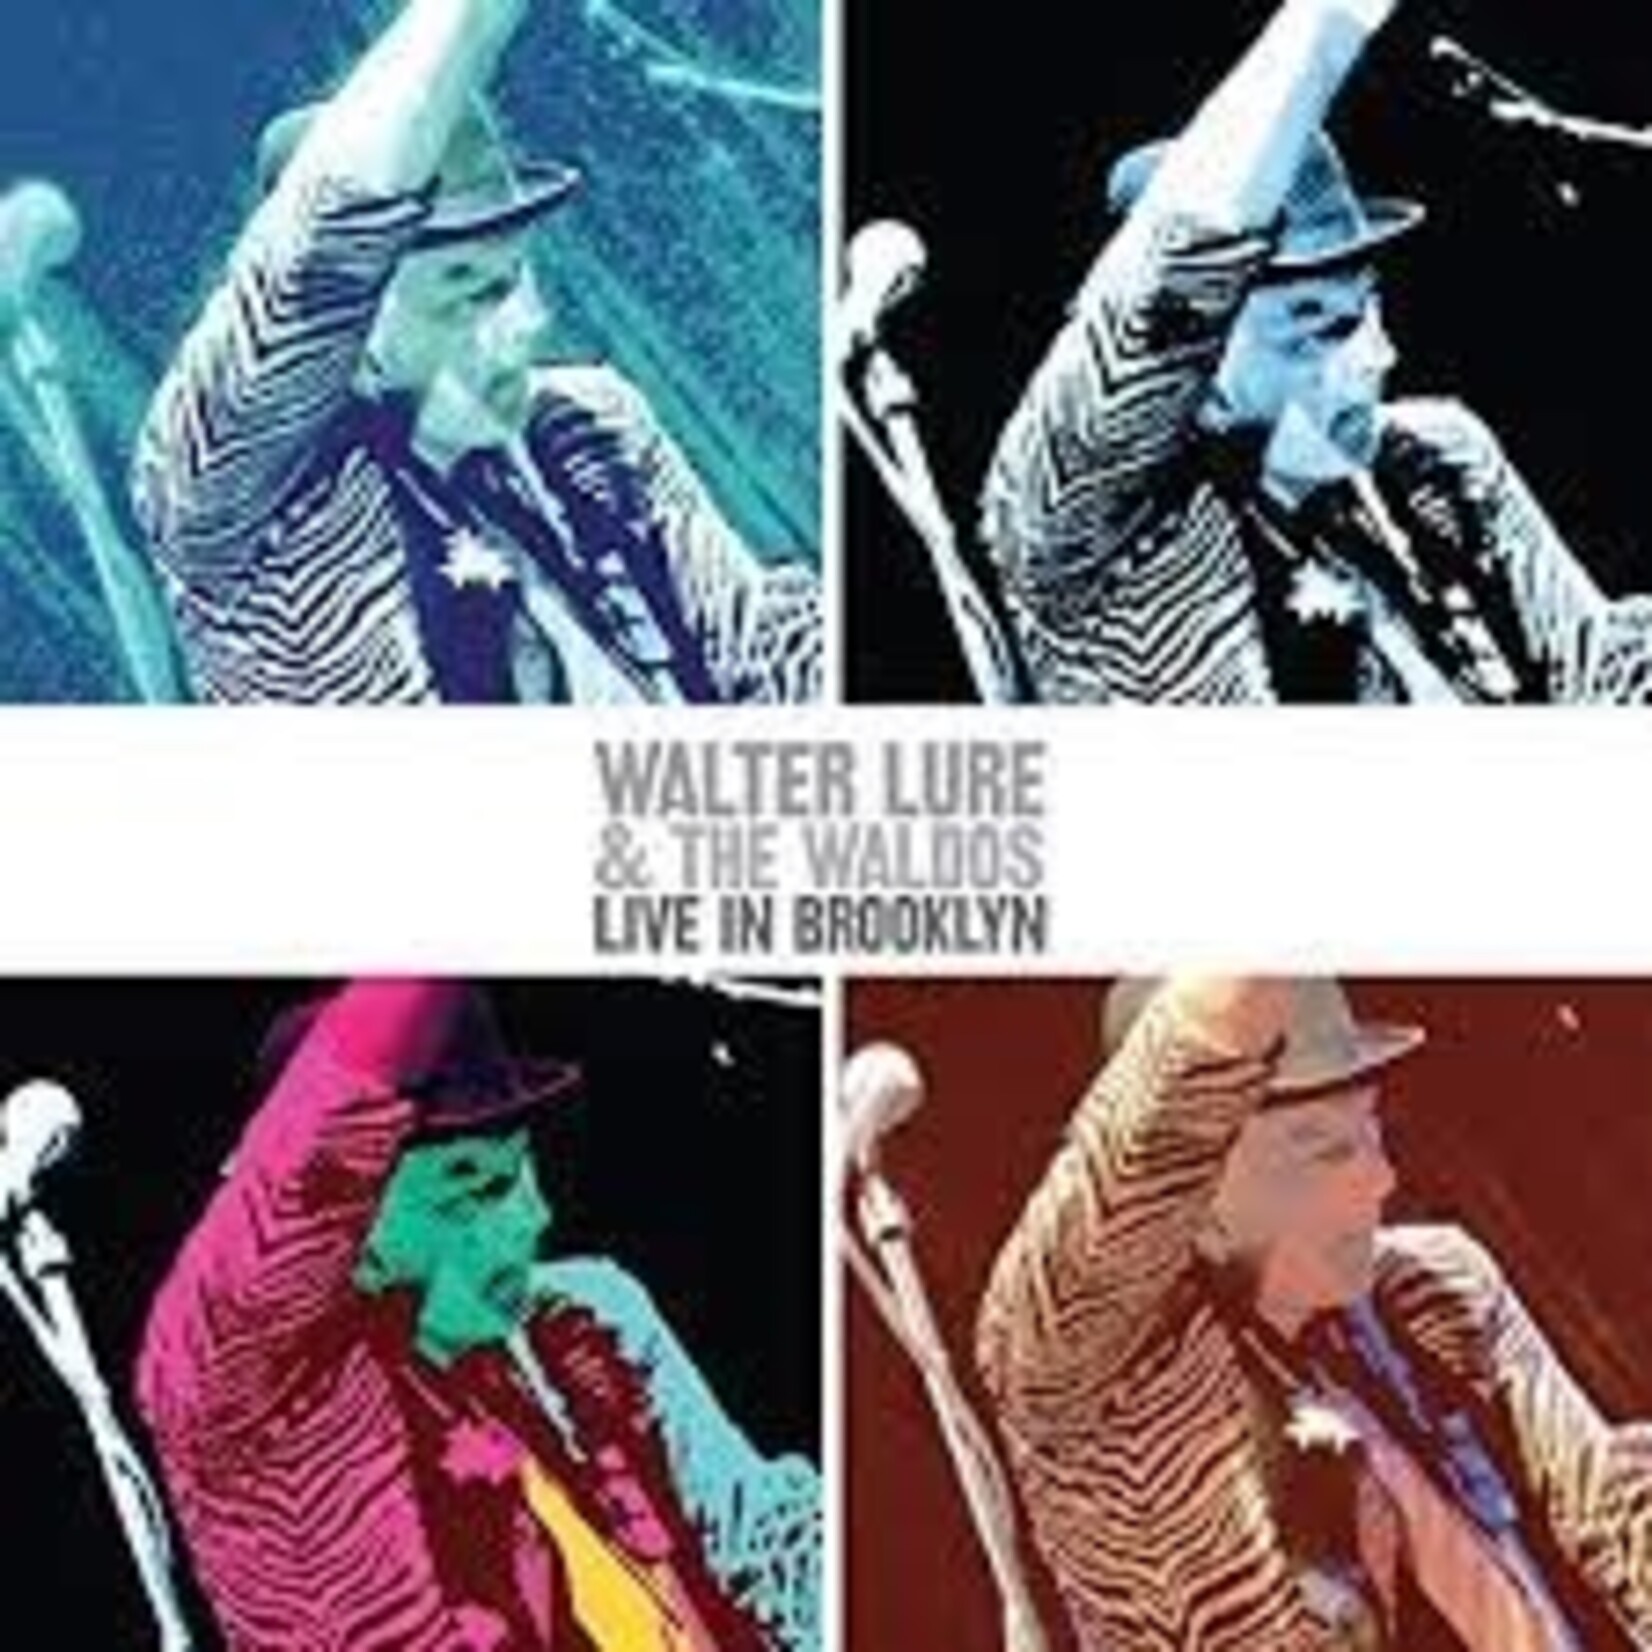 WALTER LURE & the waldos - live Brooklyn LP